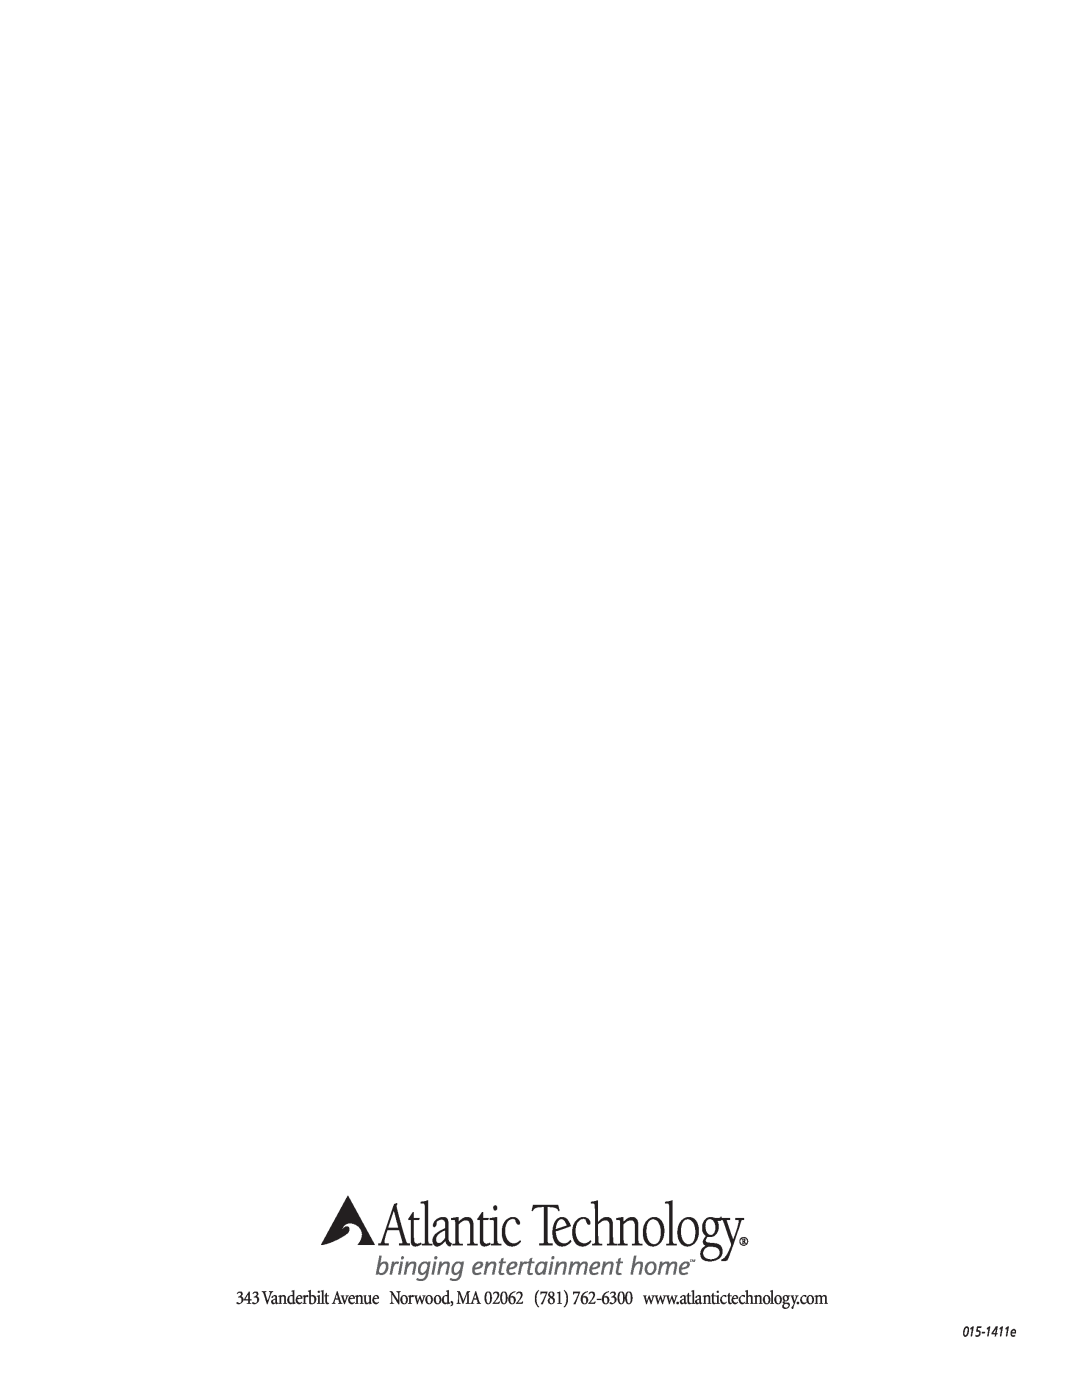 Atlantic Technology 4200e THX instruction manual 015-1411e 